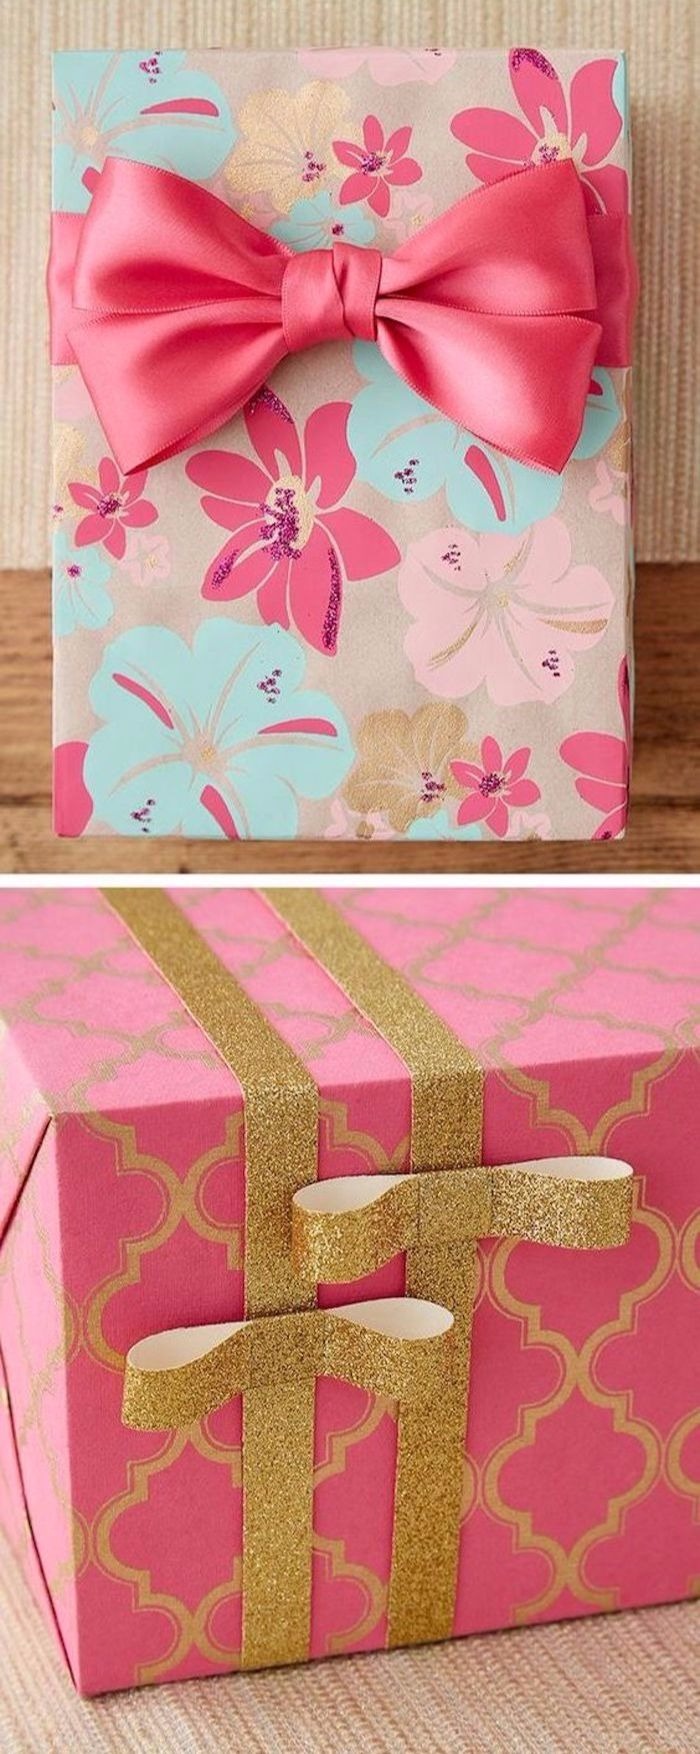 Geschenke verpacken Ideen, buntes Geschenkpapier mit Blumen, pinkes Band